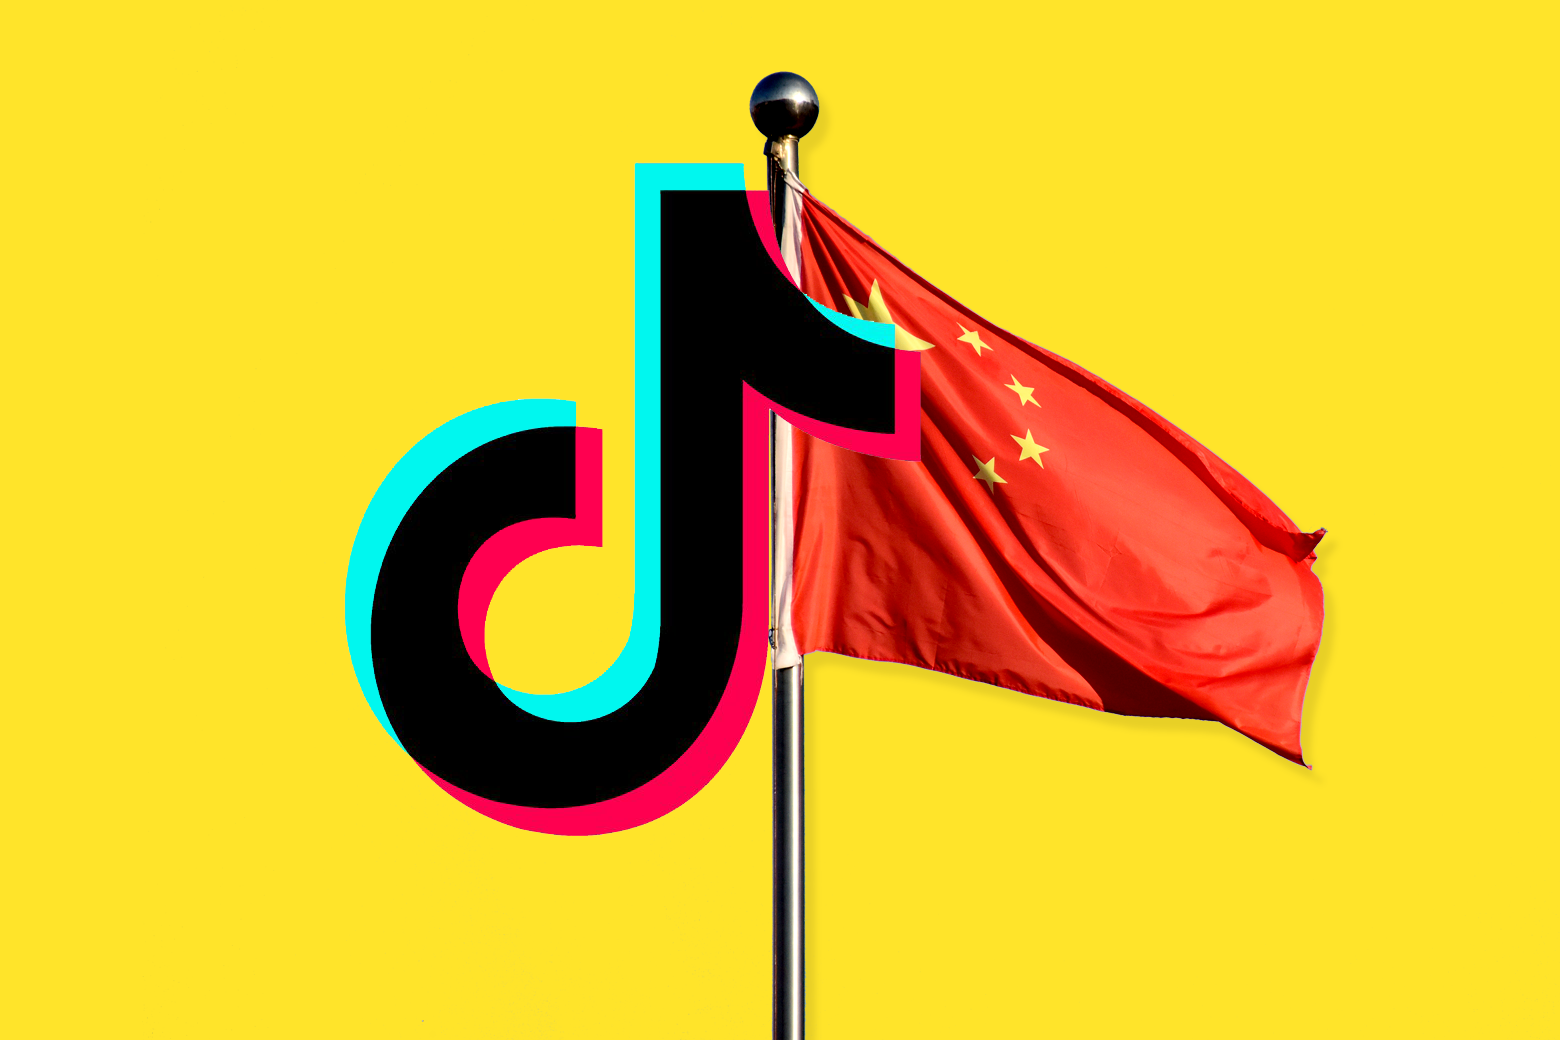 The TikTok logo and the China flag